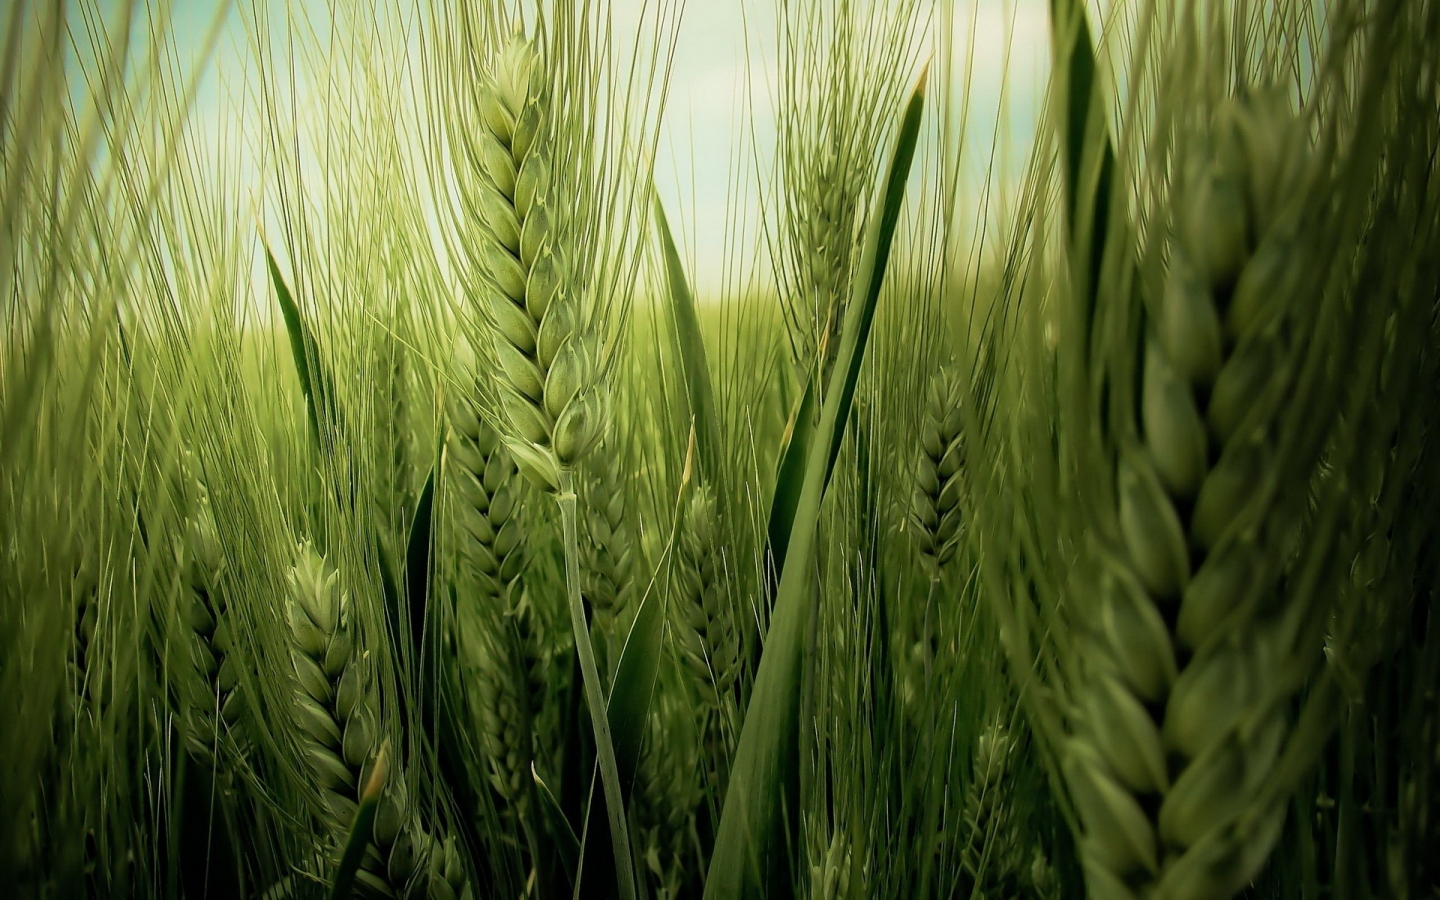 Green Wheat Field for 1440 x 900 widescreen resolution